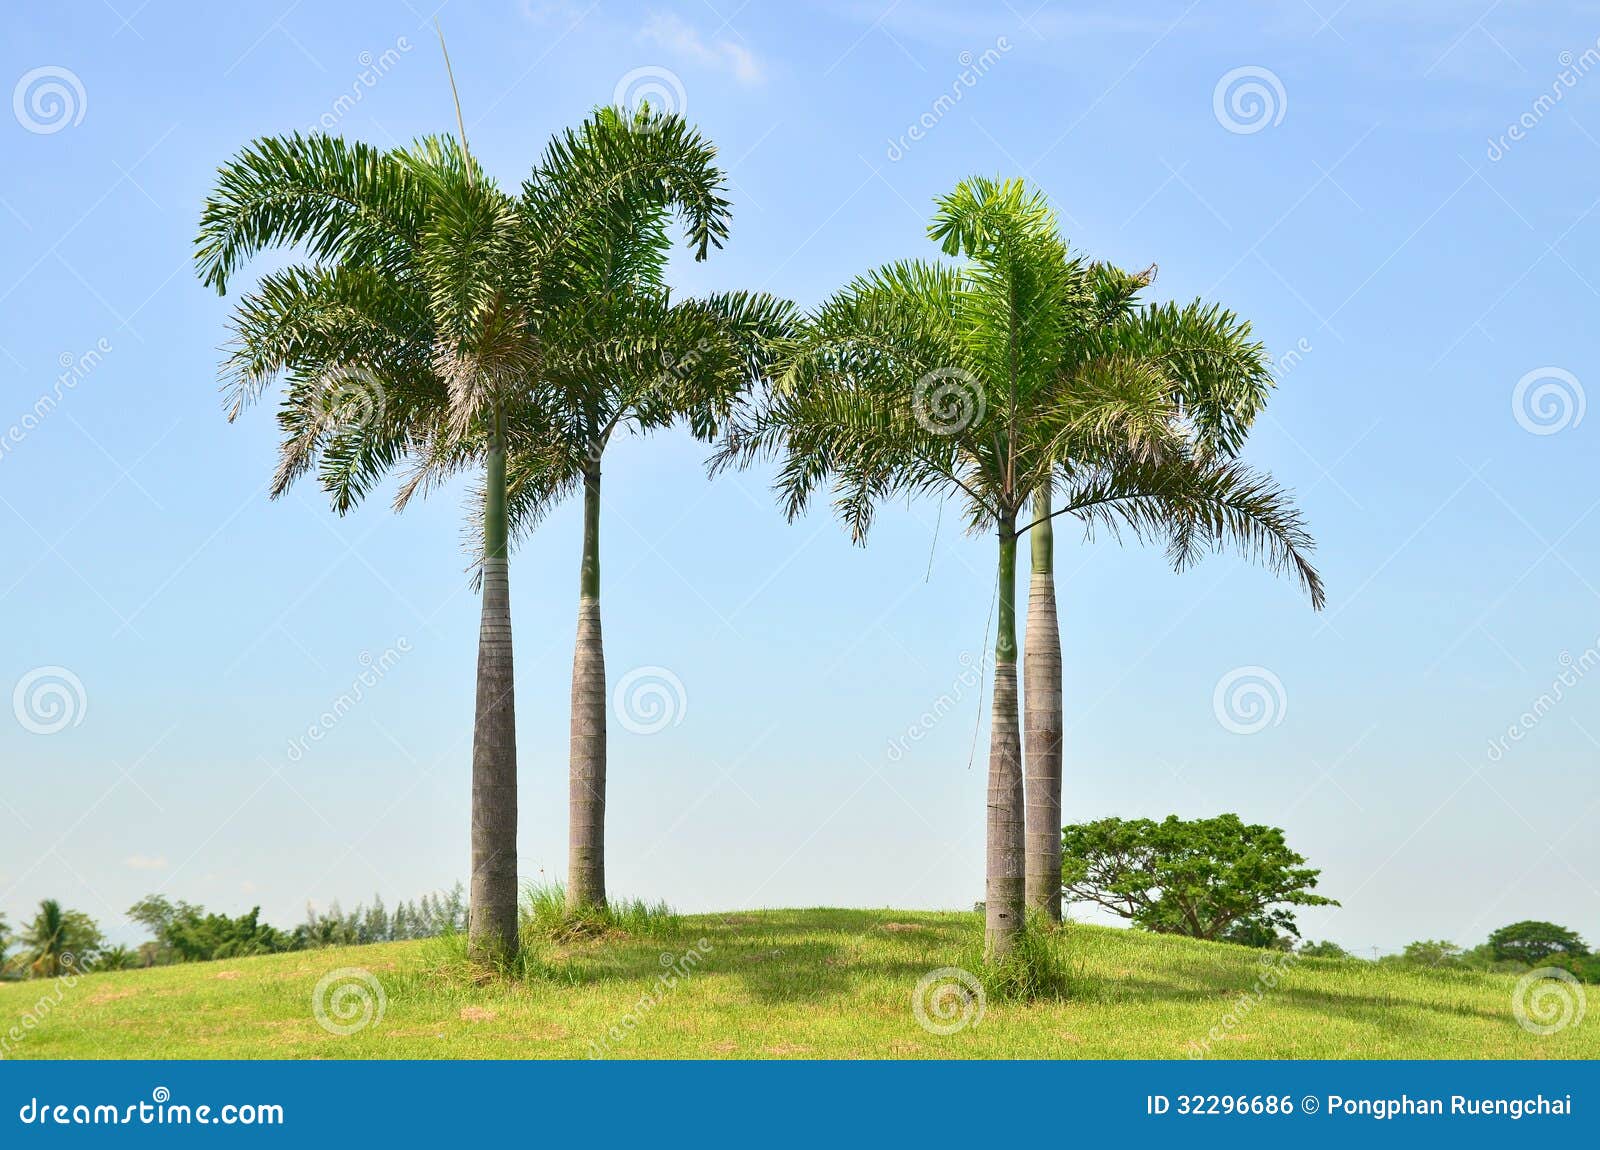 https://thumbs.dreamstime.com/z/royal-palm-tree-park-32296686.jpg